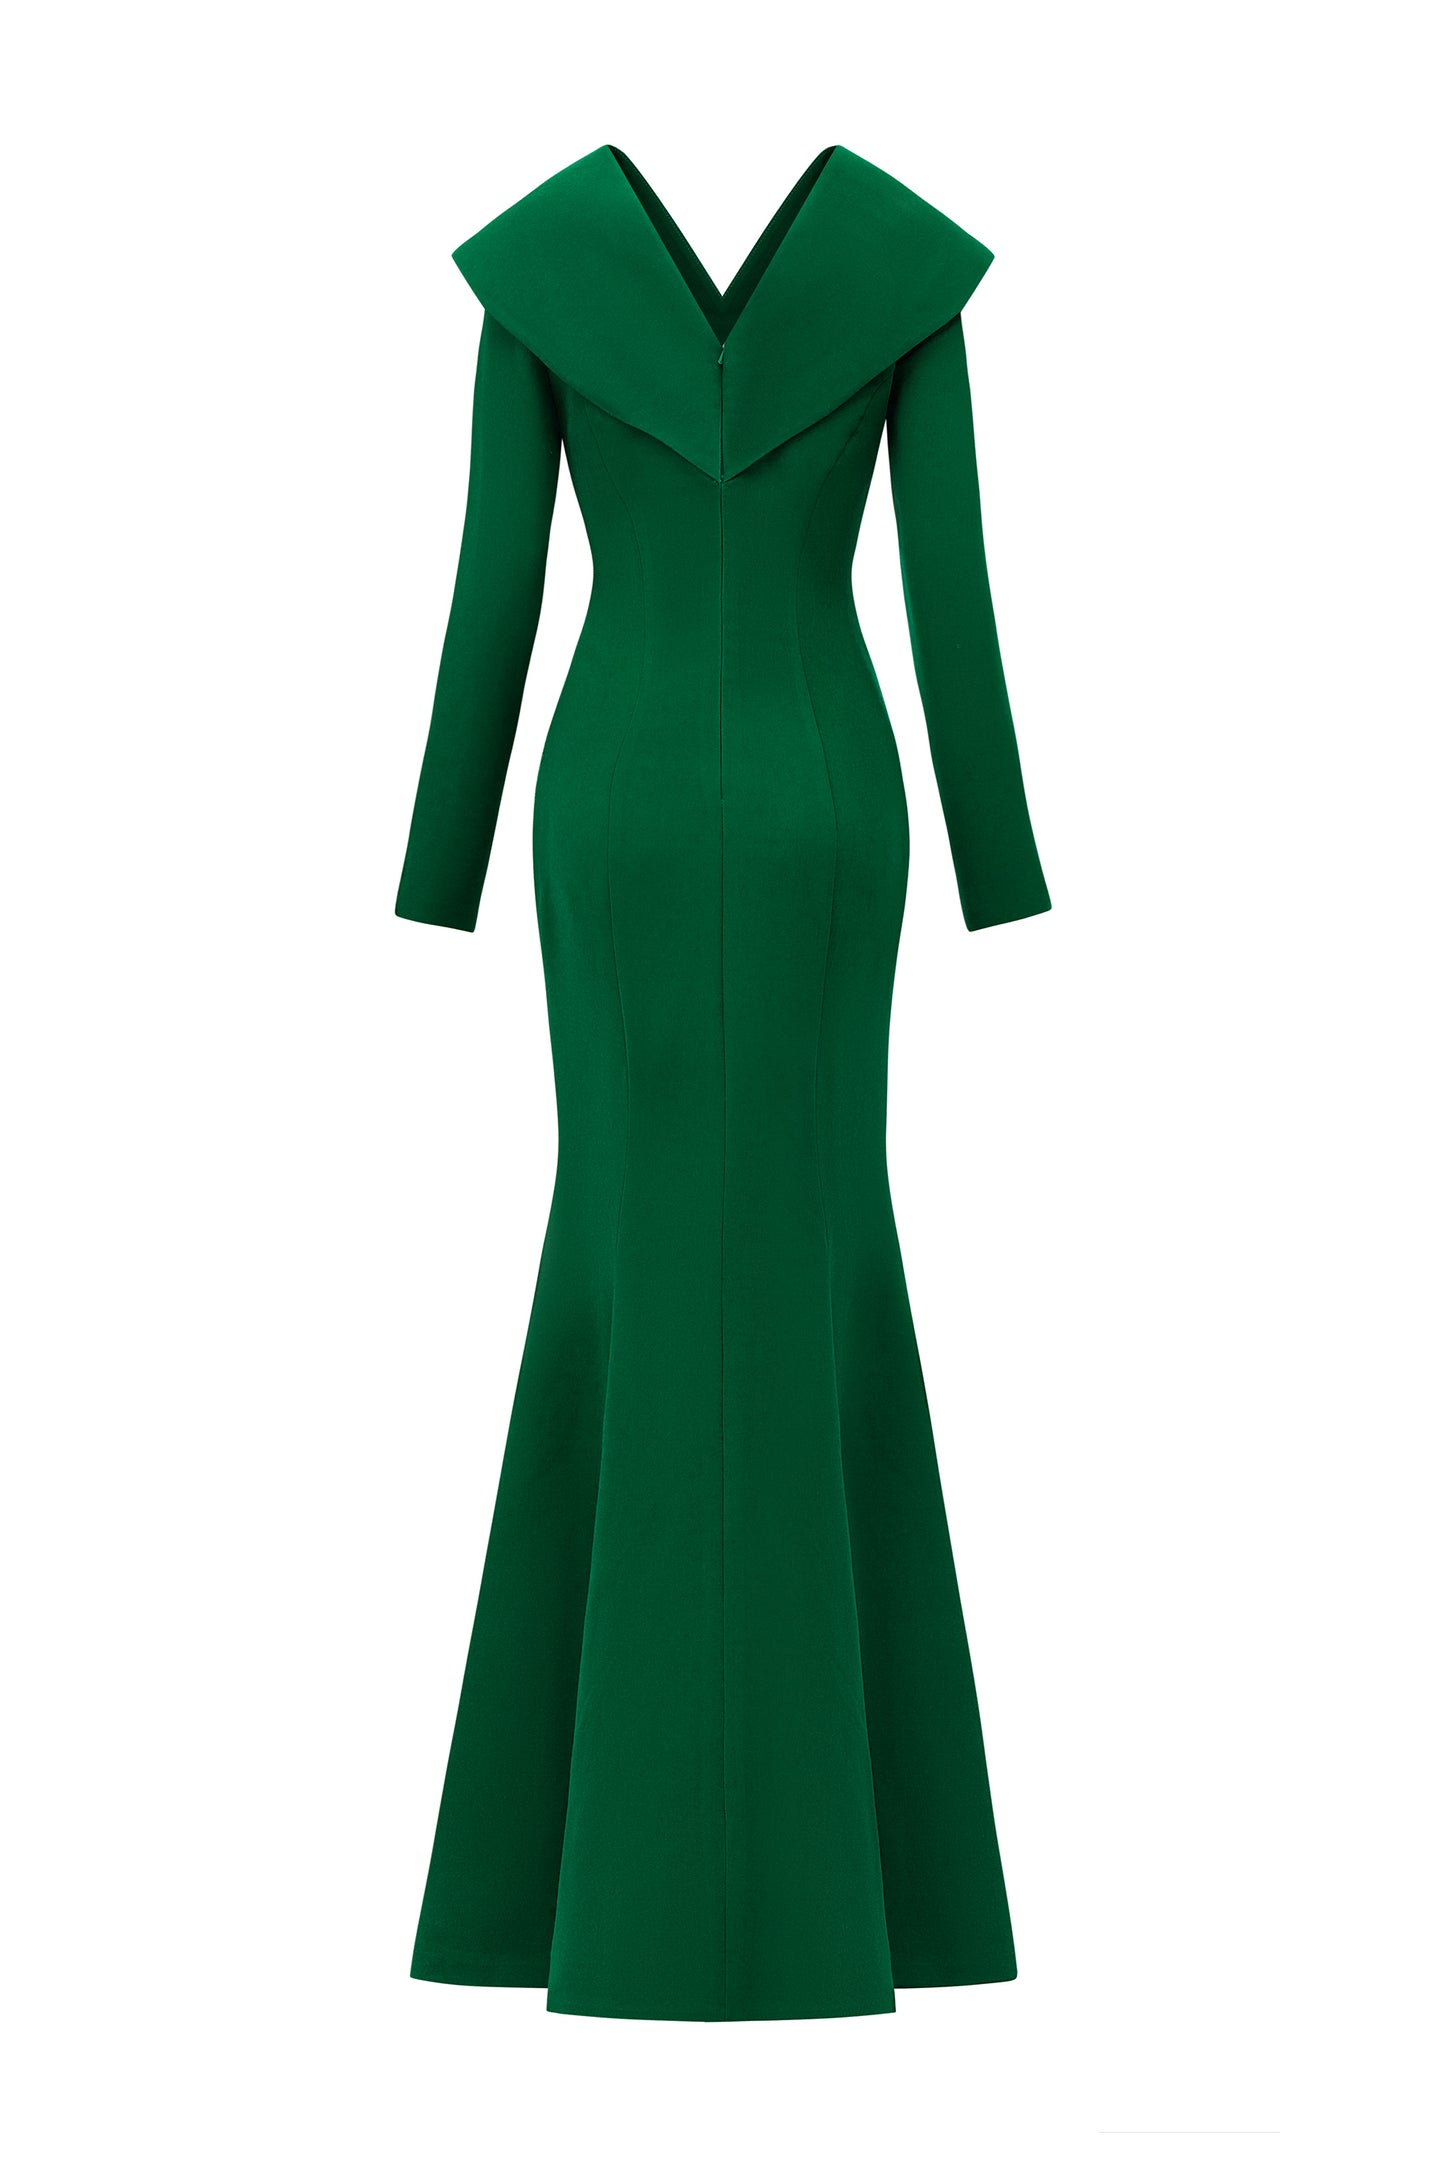 Long Sleeves Cut-Out Mermaid Green Crepe Gown